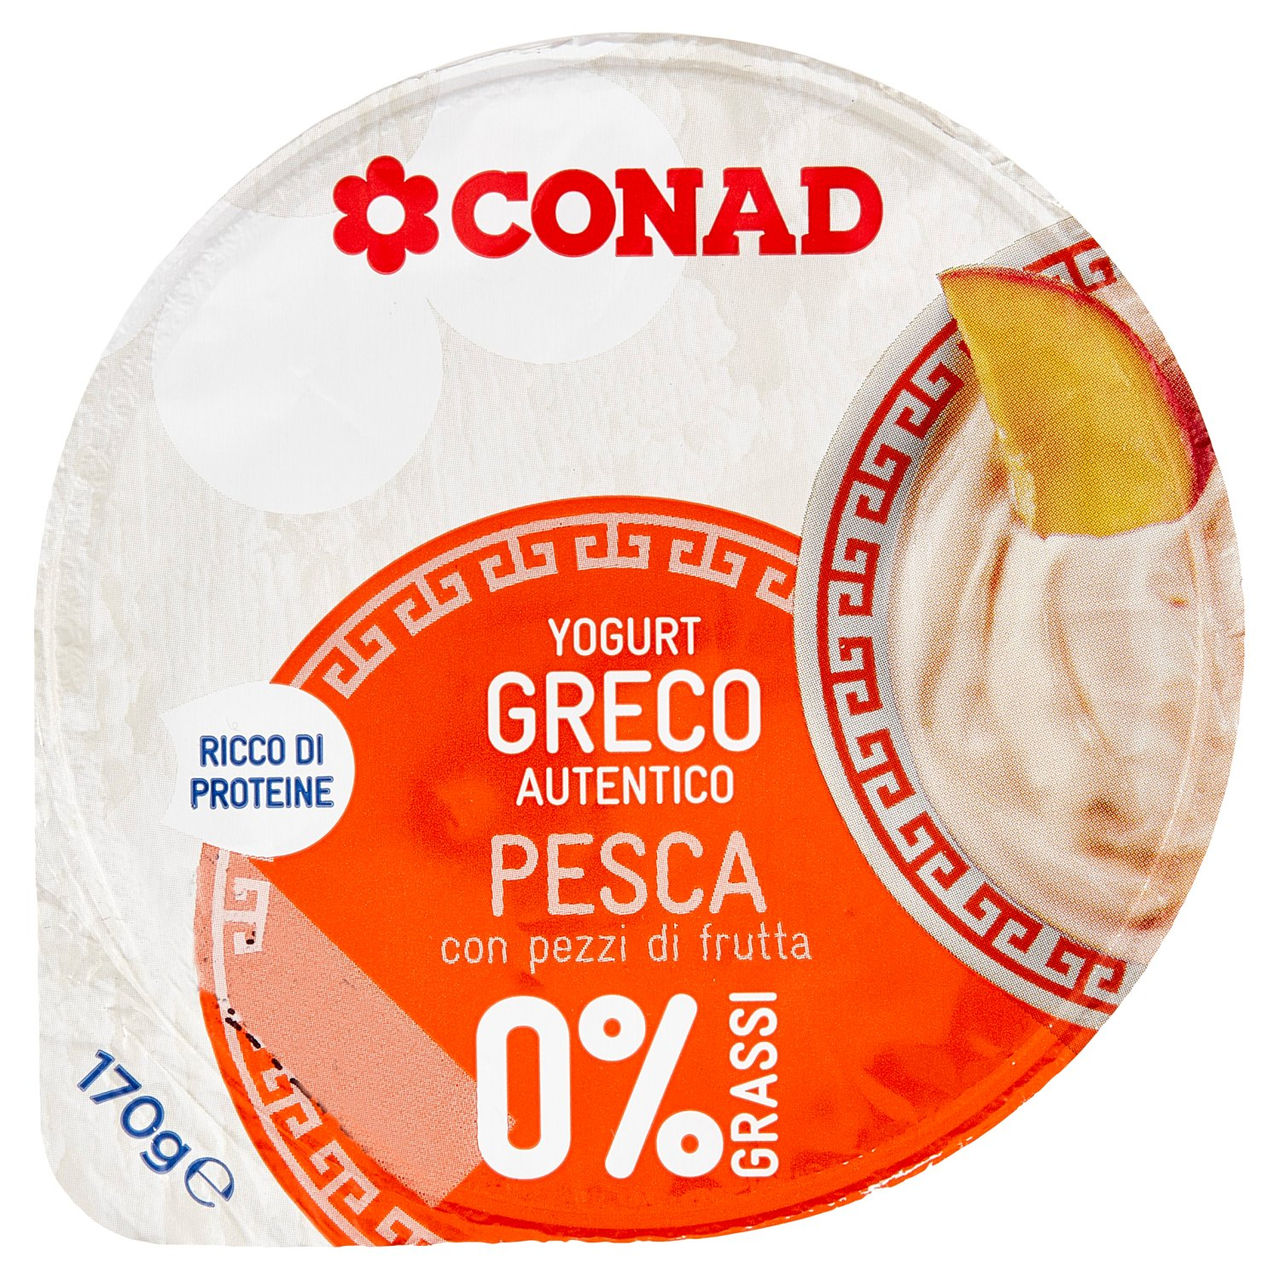 Vendita YOGURT GRECO 0% GRASSI e all'ingrosso. Yogurt & dessert